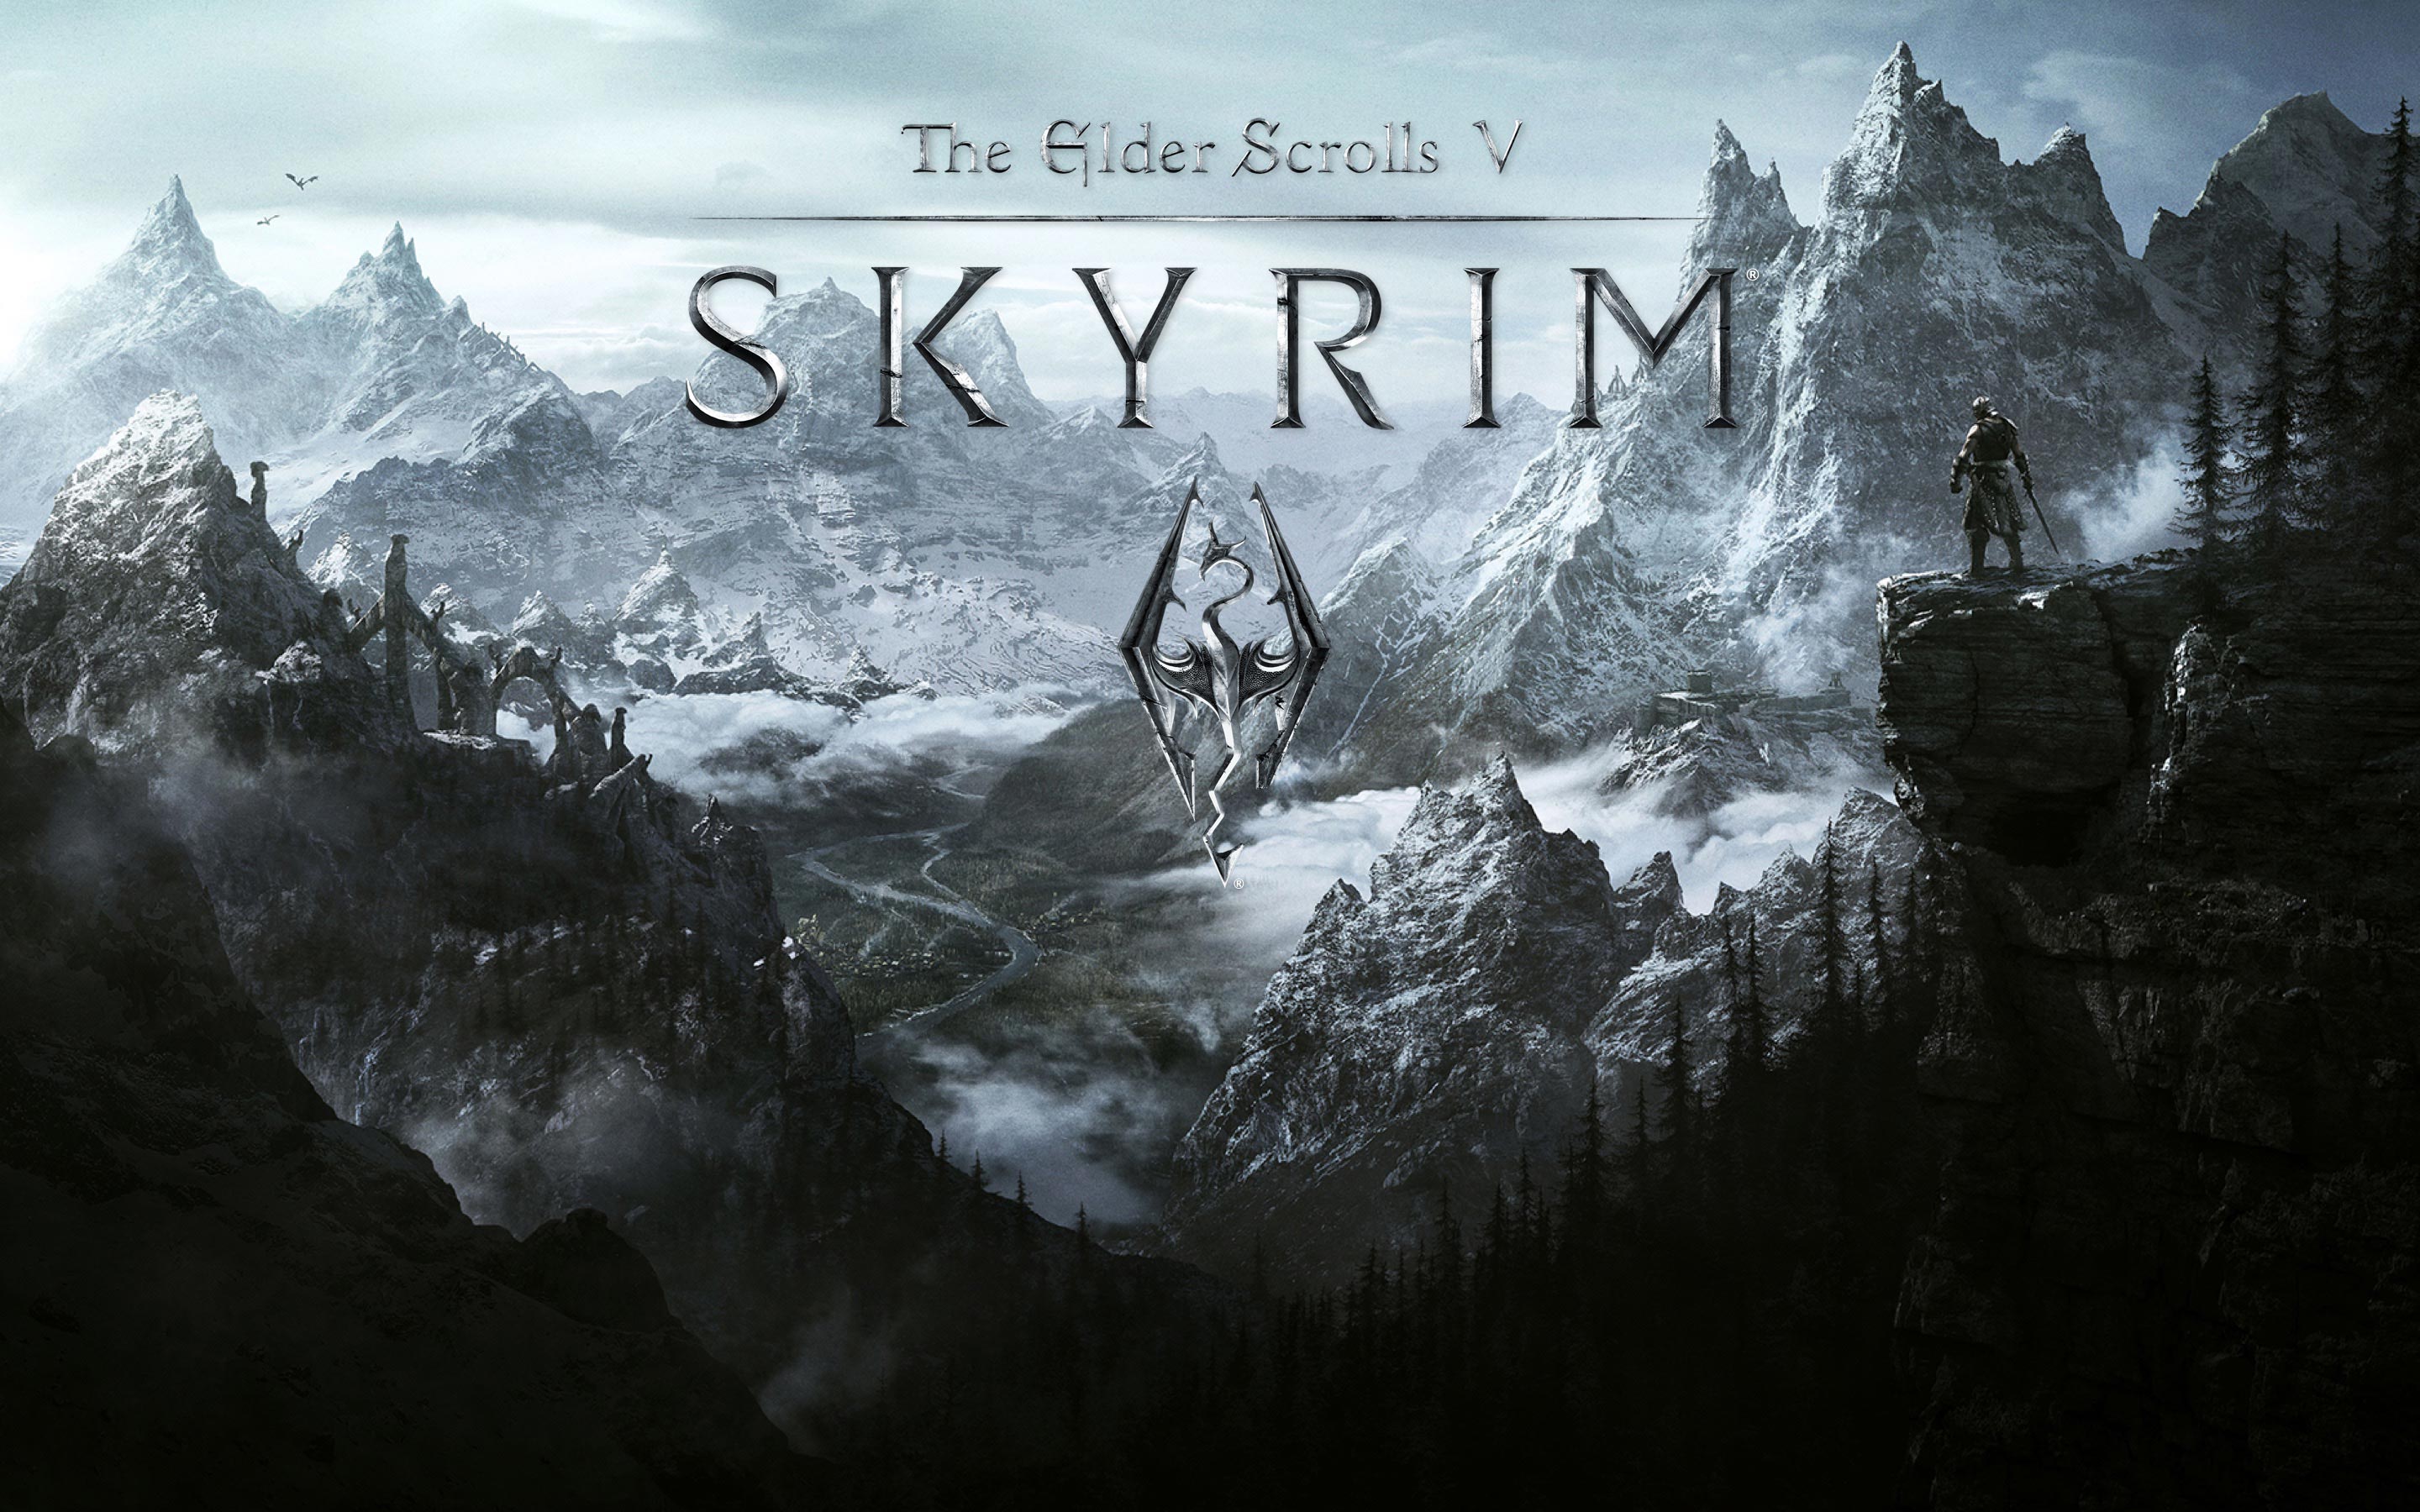 The Elder Scrolls V: Skyrim Switch file